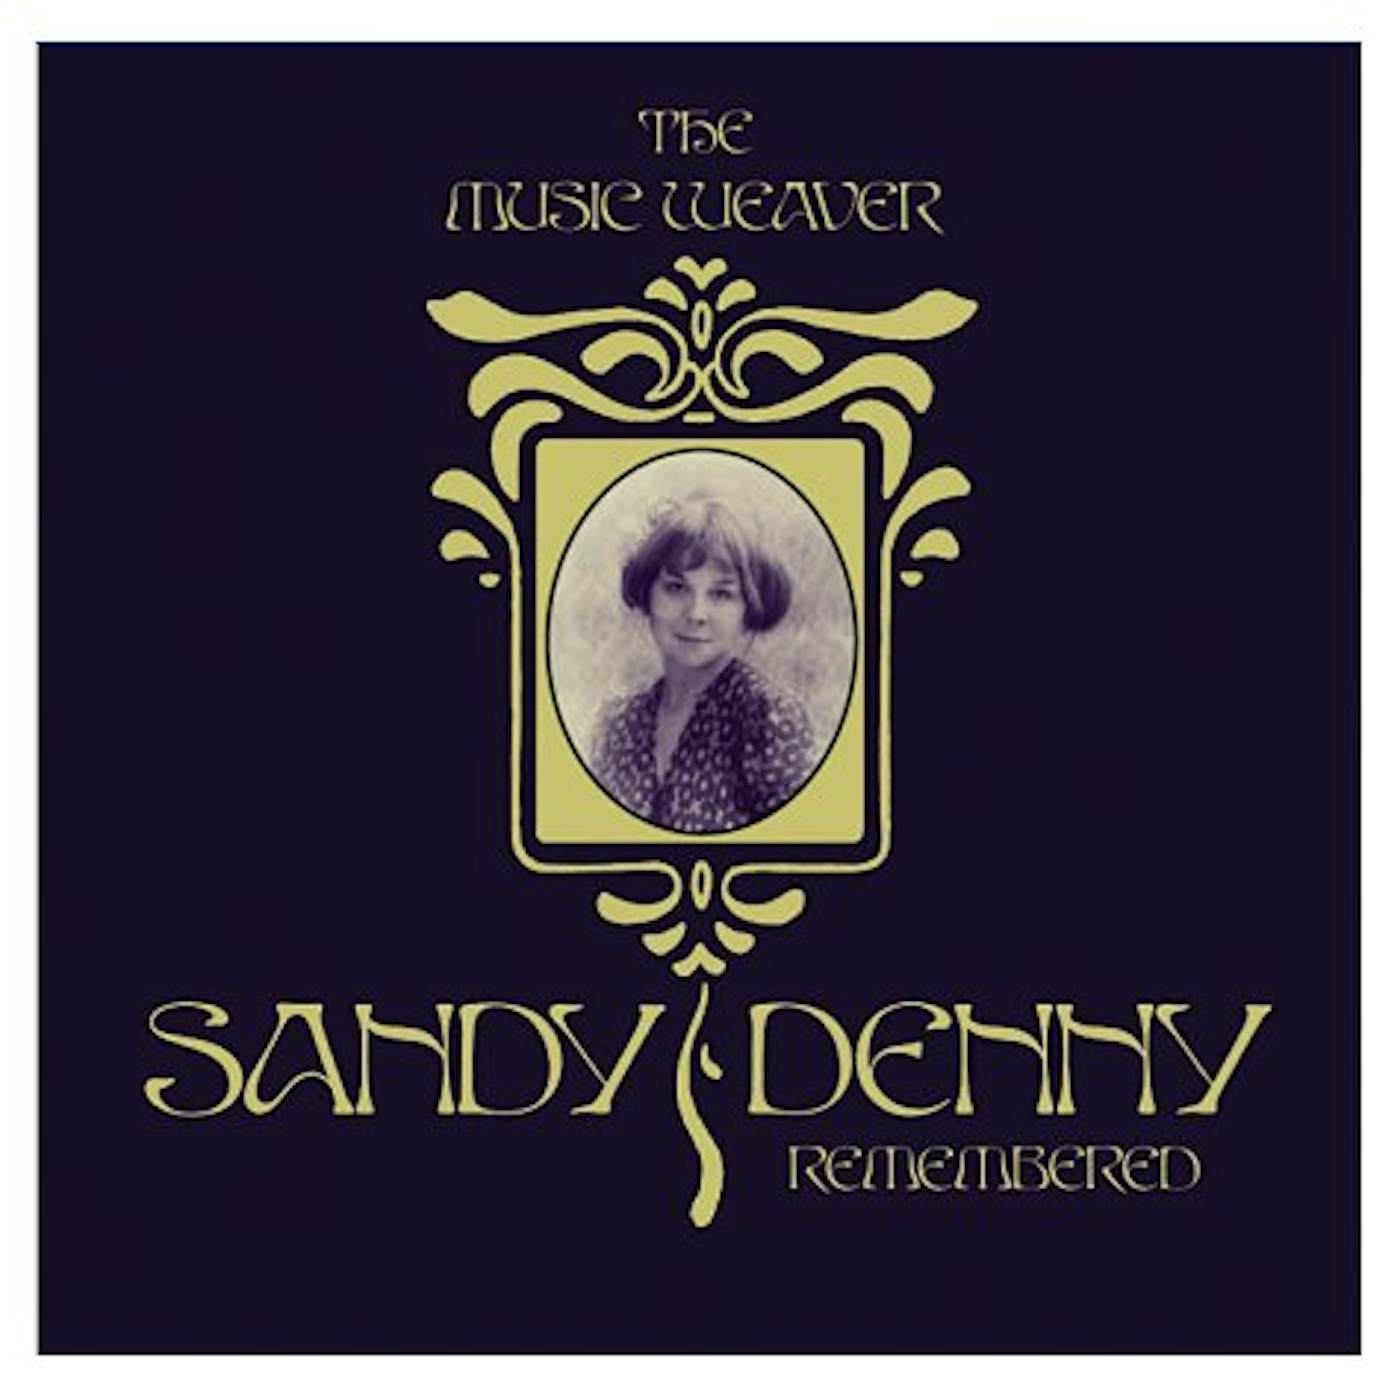 MUSIC WEAVER SANDY DENNY REMEMBERED CD